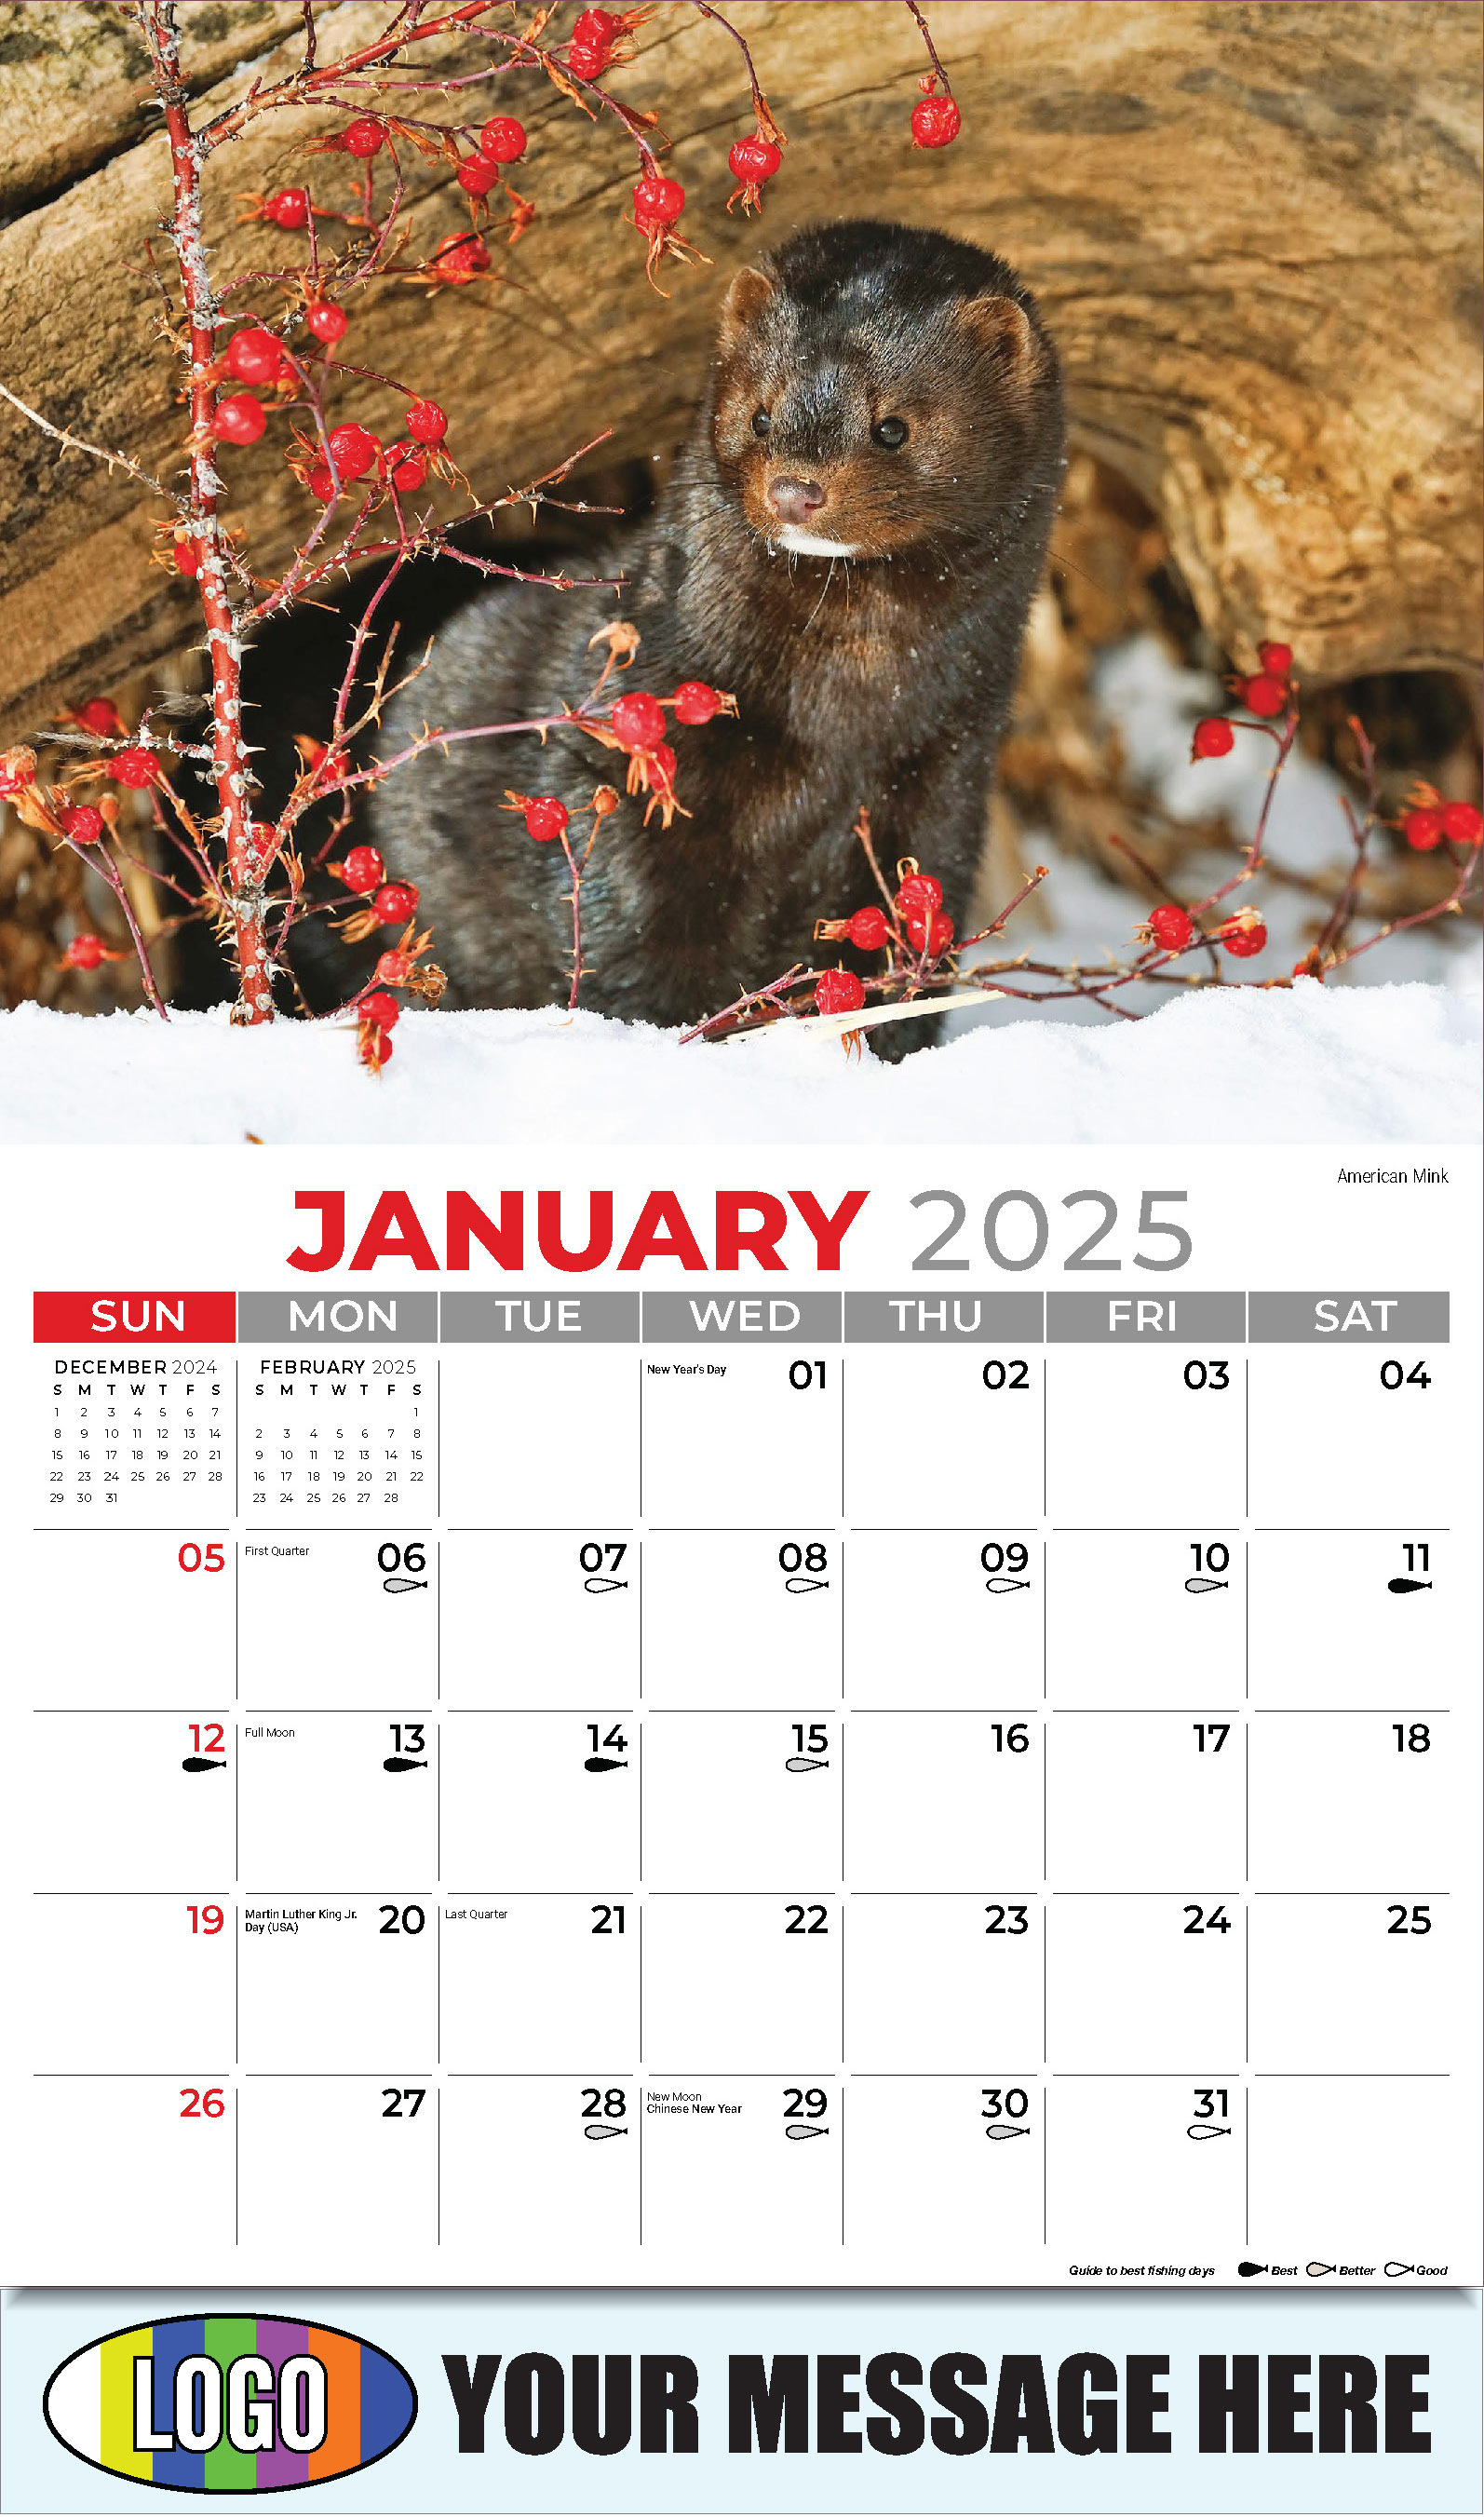 North American Wildlife 2025 Business Promo Wall Calendar - January